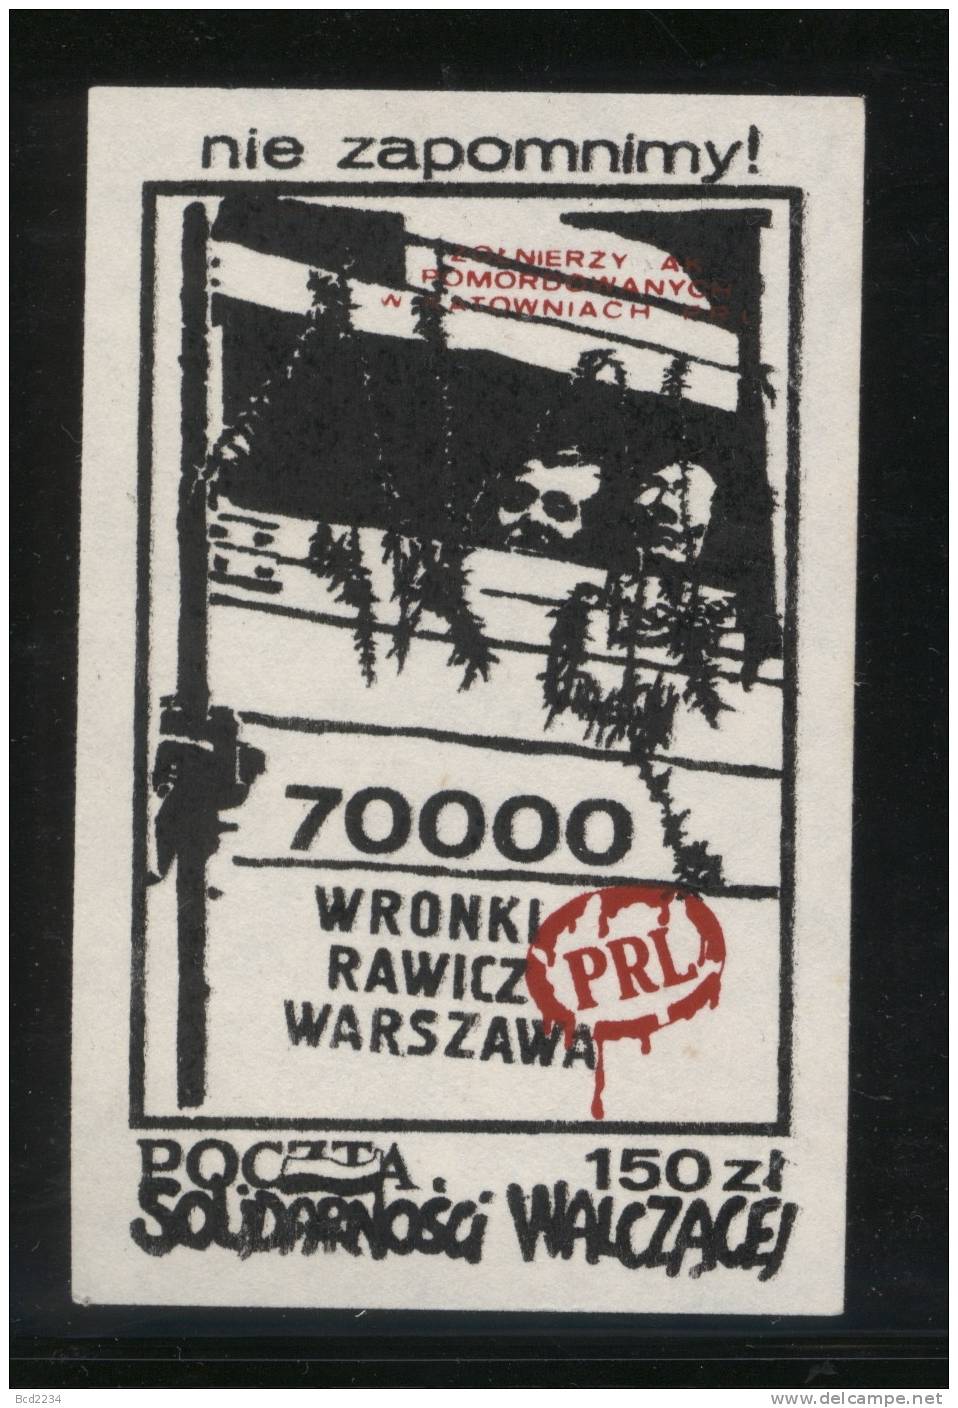 POLAND SOLIDARITY POCZTA SOLIDARNOSCI WALCZACEJ LEST WE FORGET WARSAW WRONKI RAWICZ MS NKVD SOLID725/421 Barbed Wire WW2 - Guerre Mondiale (Seconde)